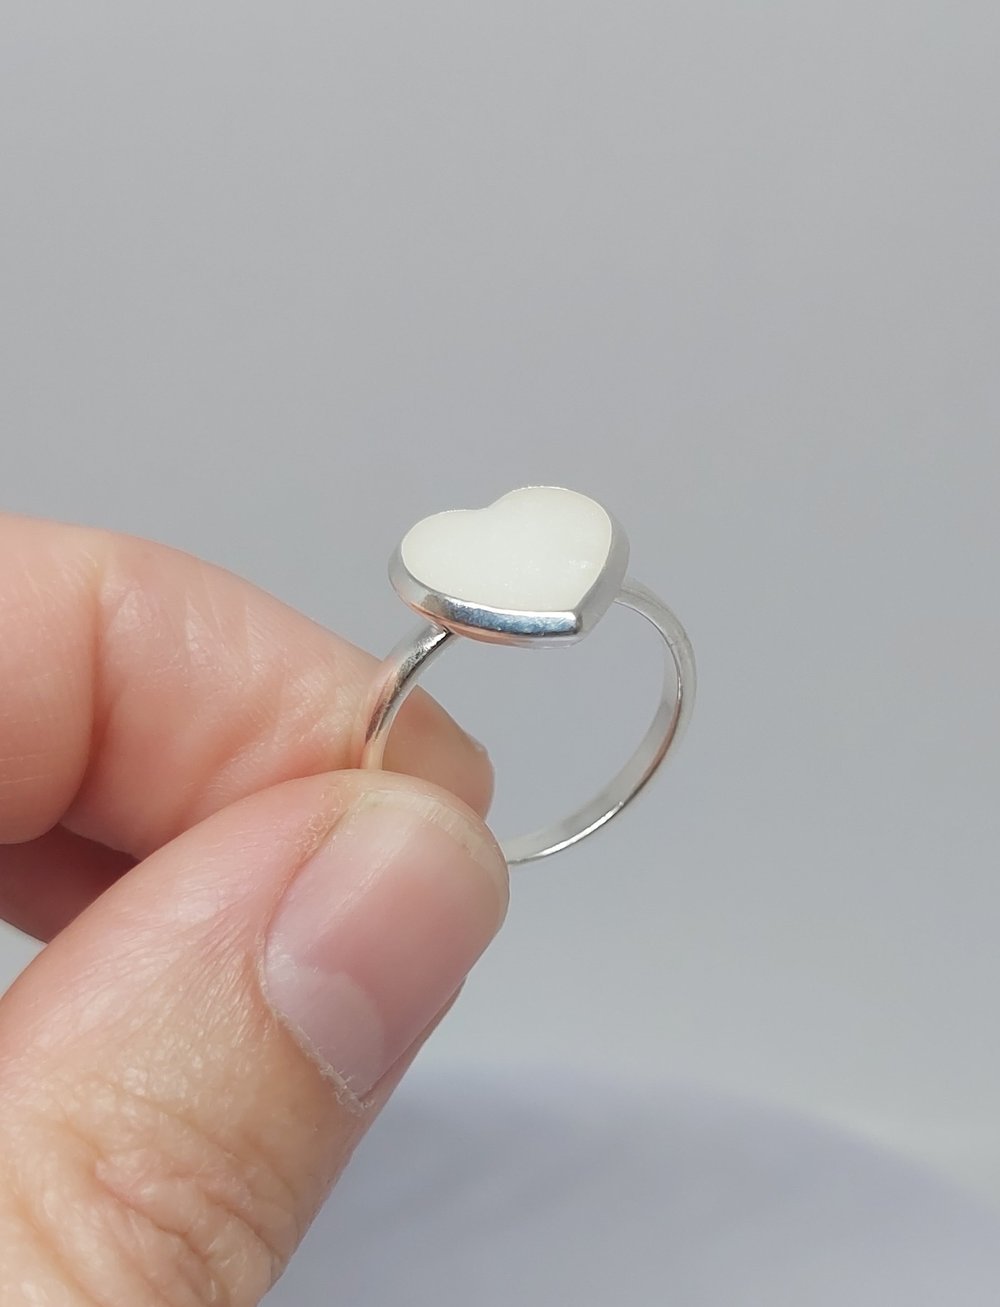 DIY Breastmilk Jewelry Kit - Round Stacking Ring — Mama Milk Fairy,  Breastmilk & DNA Jewelry